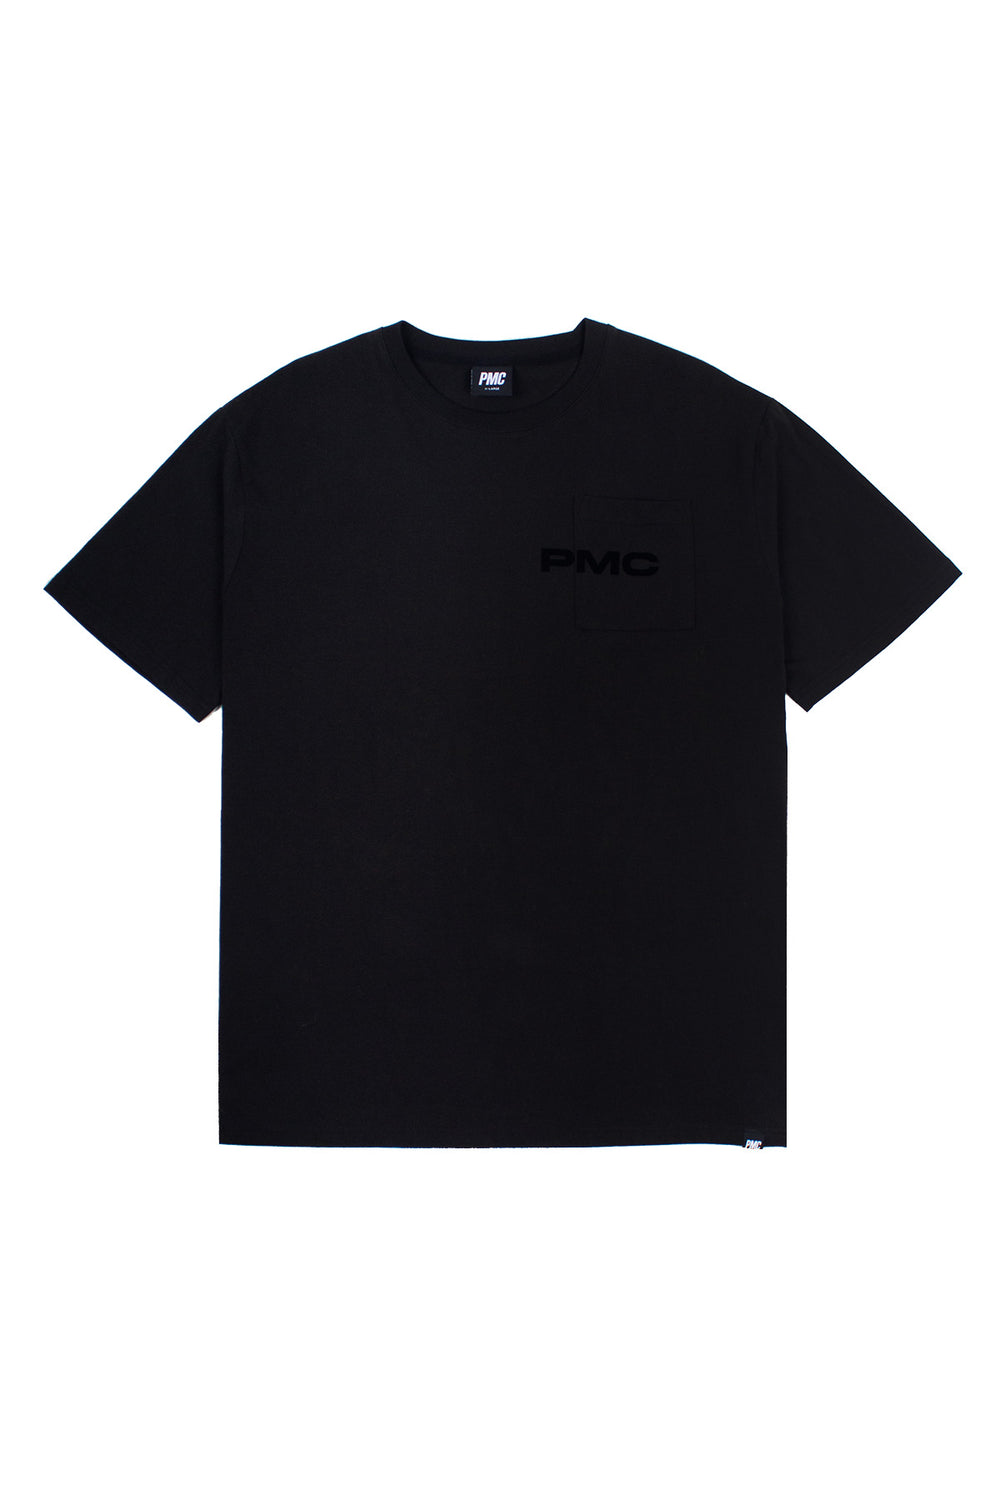 PMC | Prime Logo Flock Pocket Tee Black